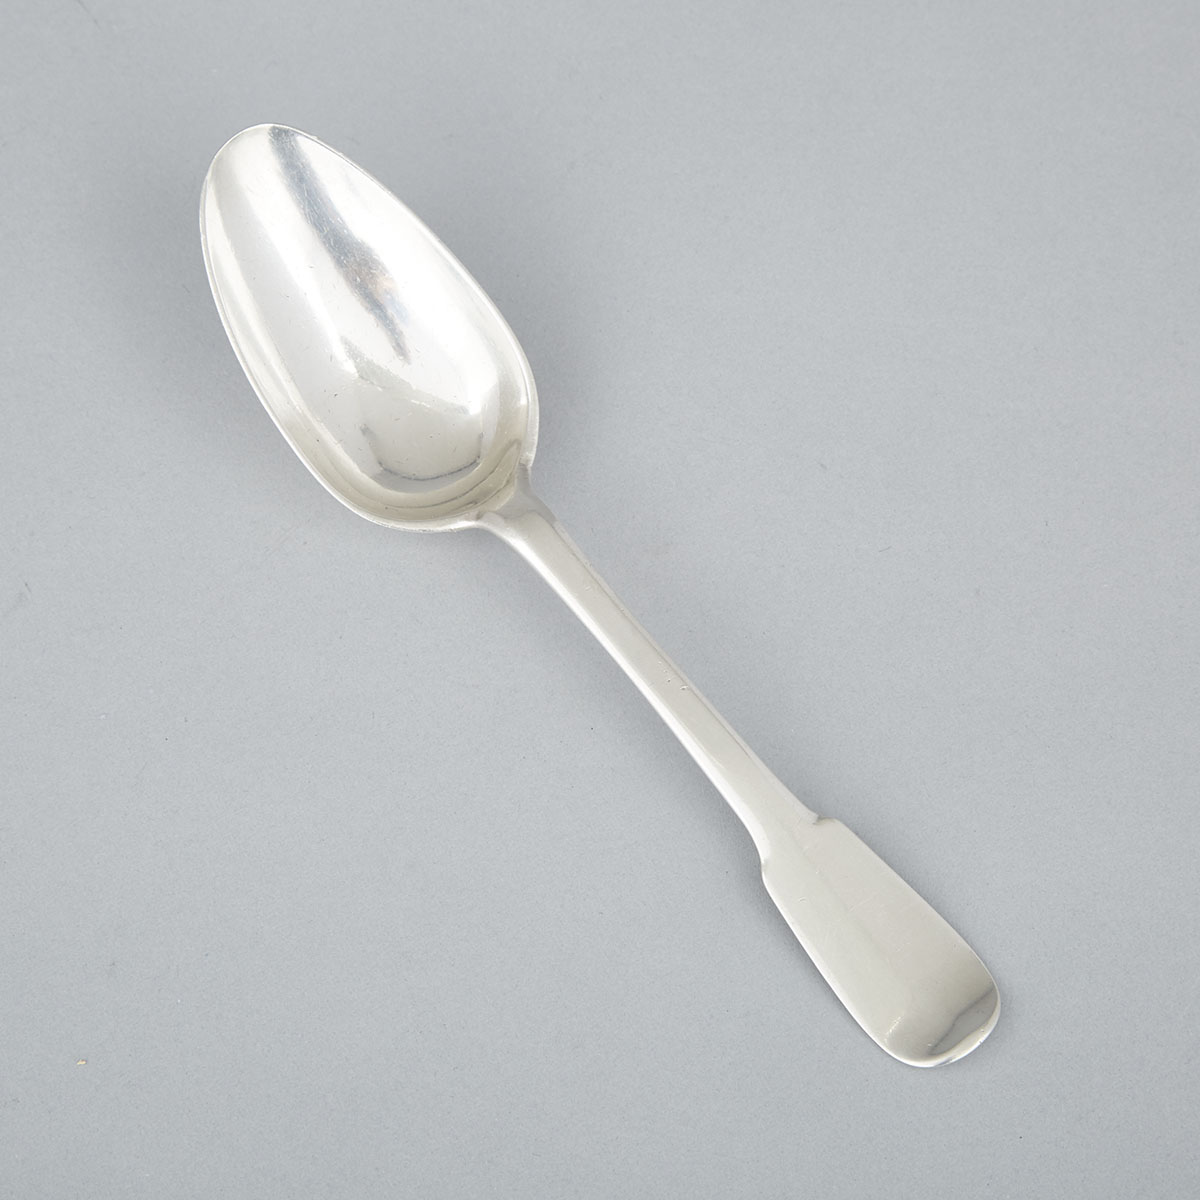 Canadian Silver Table Spoon, Charles-François Delique, Quebec City, Que., c.1770